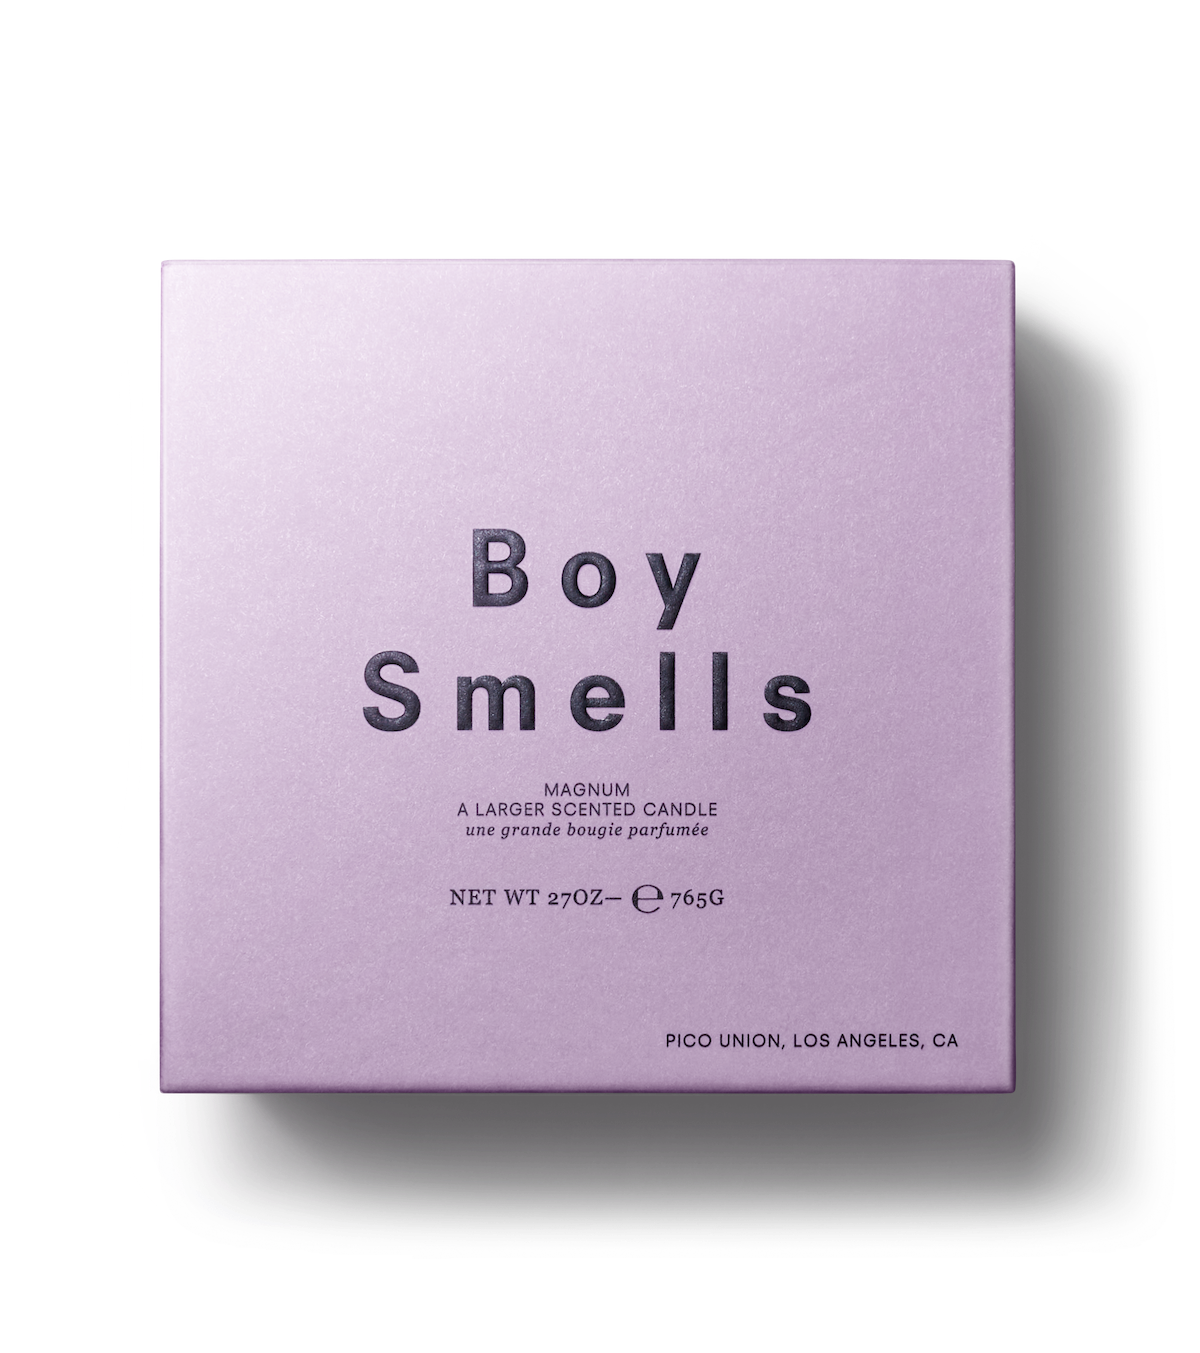 Purple Kush Magnum (27oz) | Boy Smells